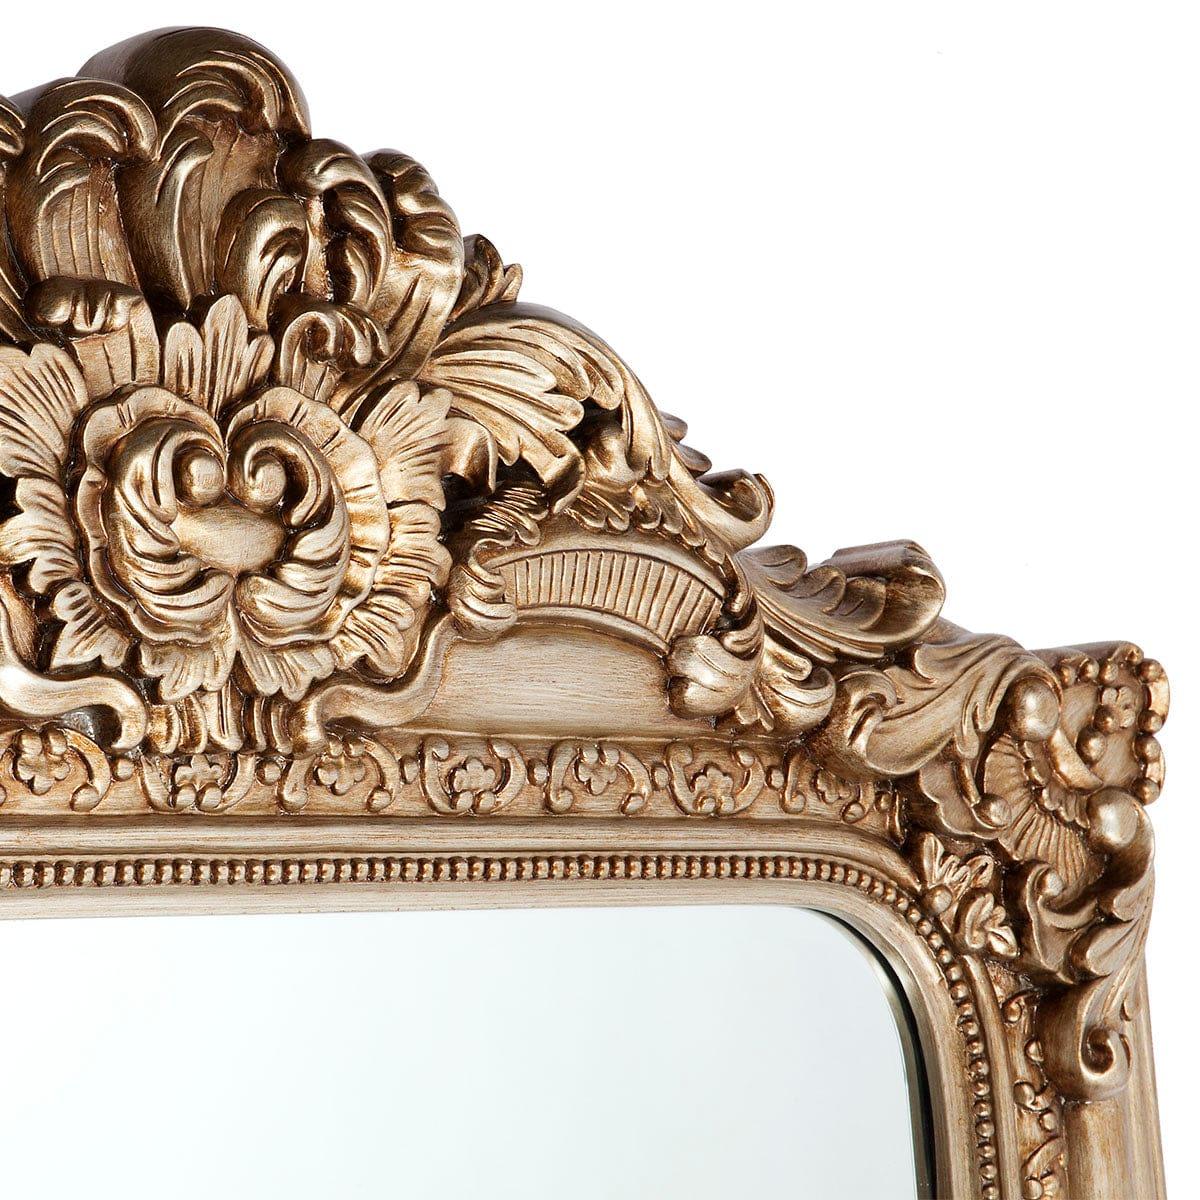 House Journey Elizabeth Floor Mirror - Antique Gold